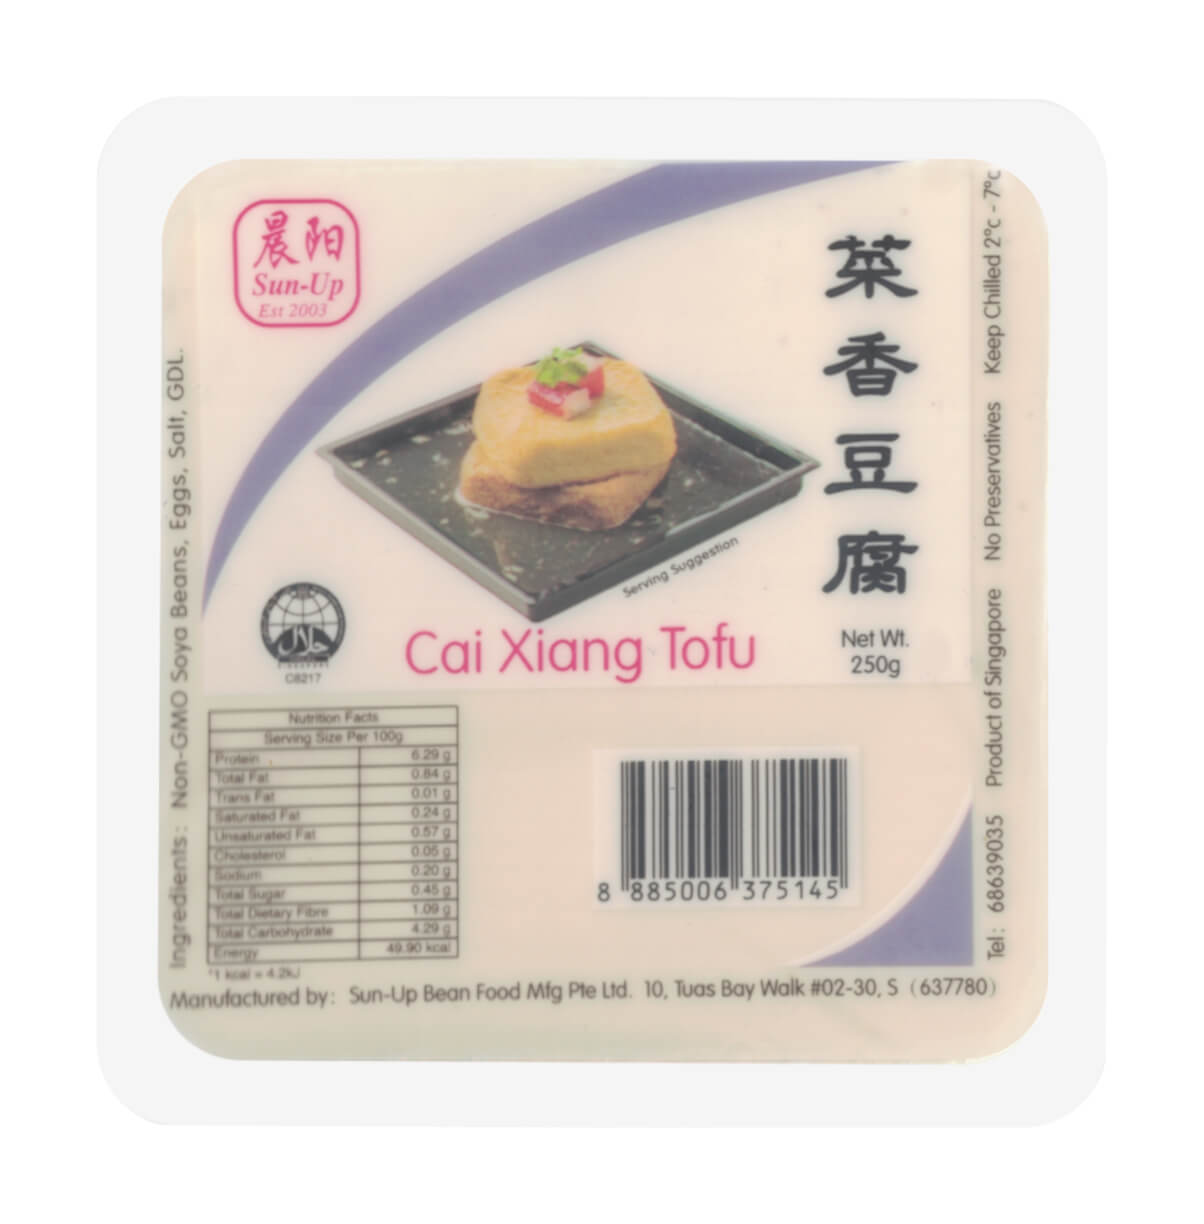 Sun-Up Singapore Tofu Supplier CaiXiang Tofu